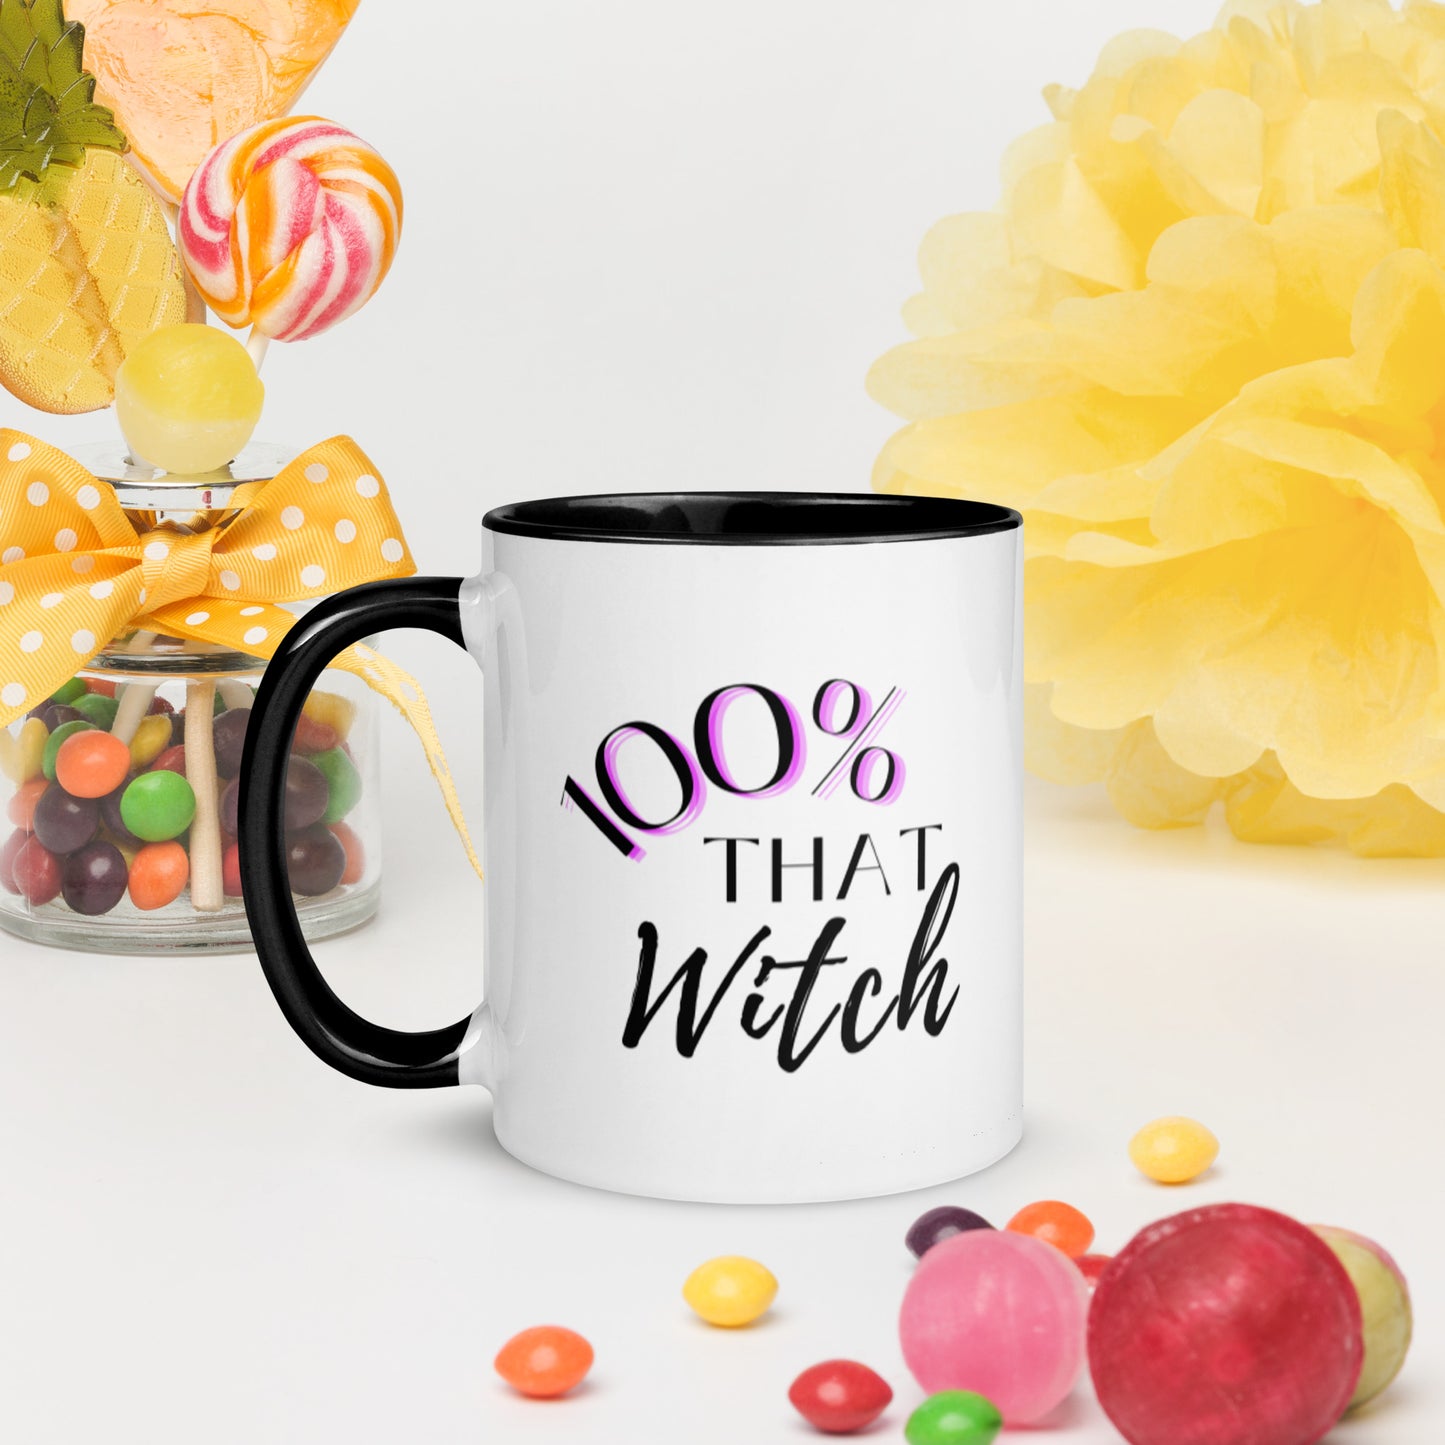 Mug: 100% That Witch